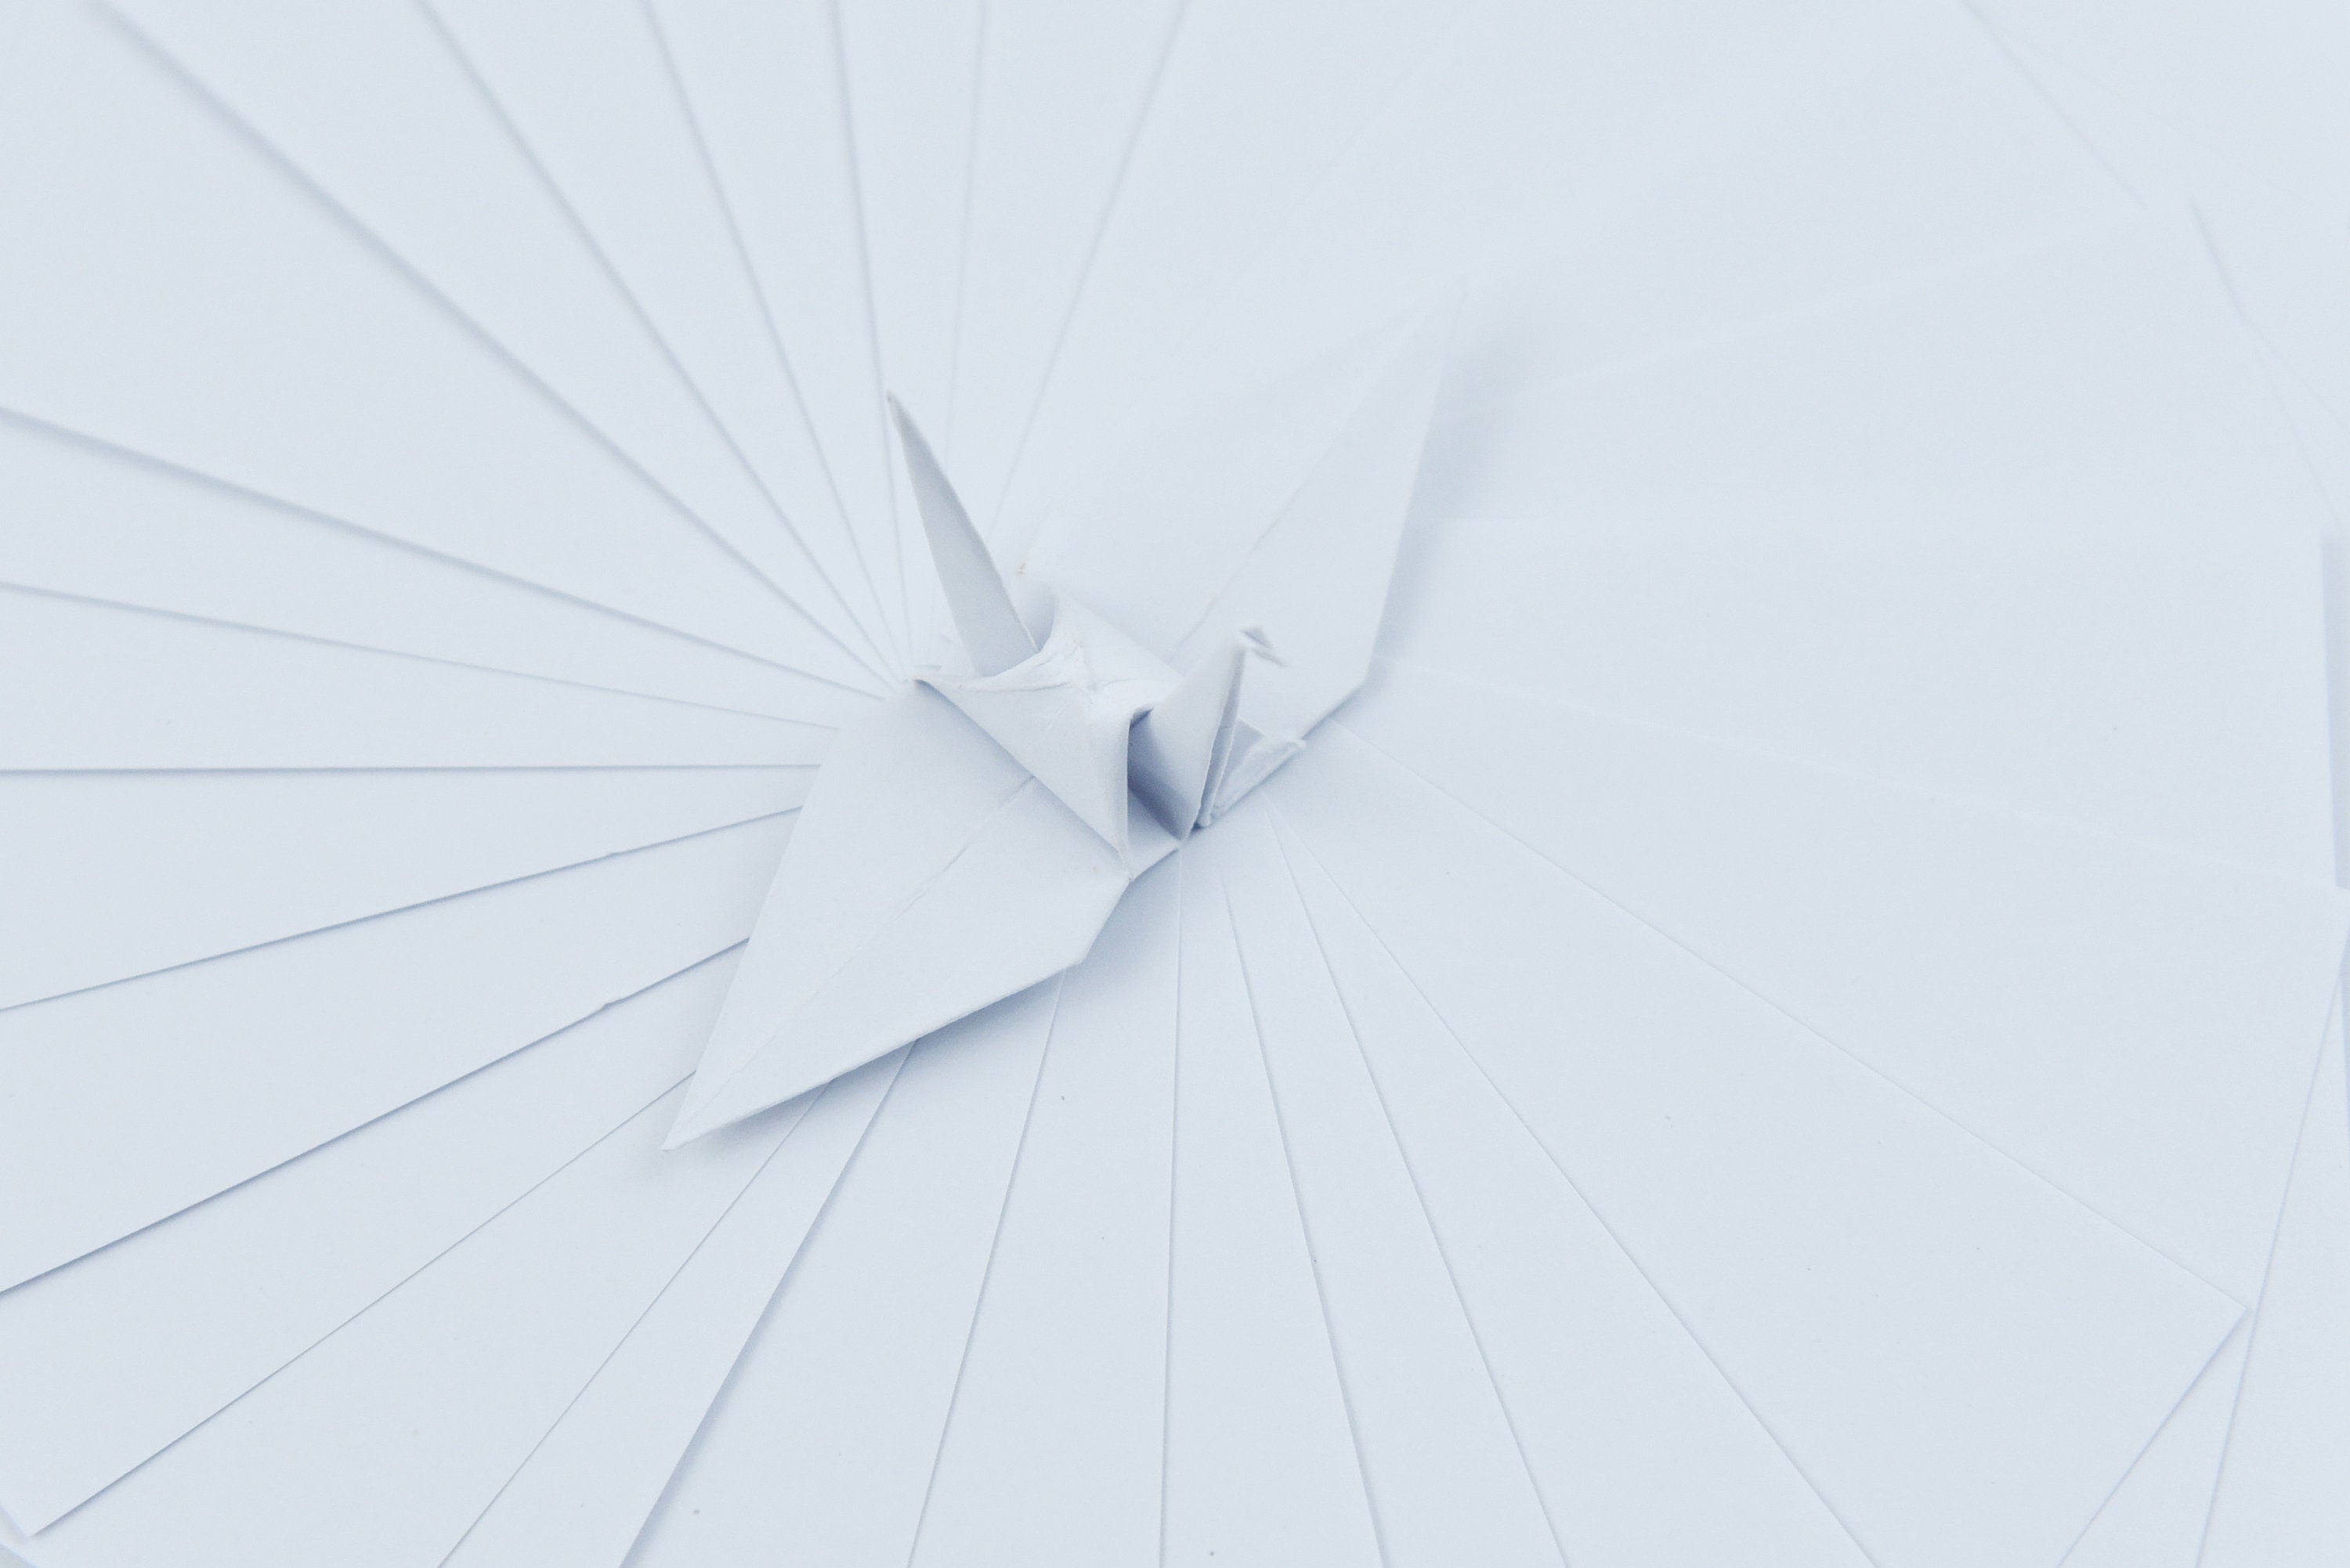 100 fogli di carta origami bianchi - 3x3 pollici - Confezione di carta quadrata per piegare, gru origami e decorazioni